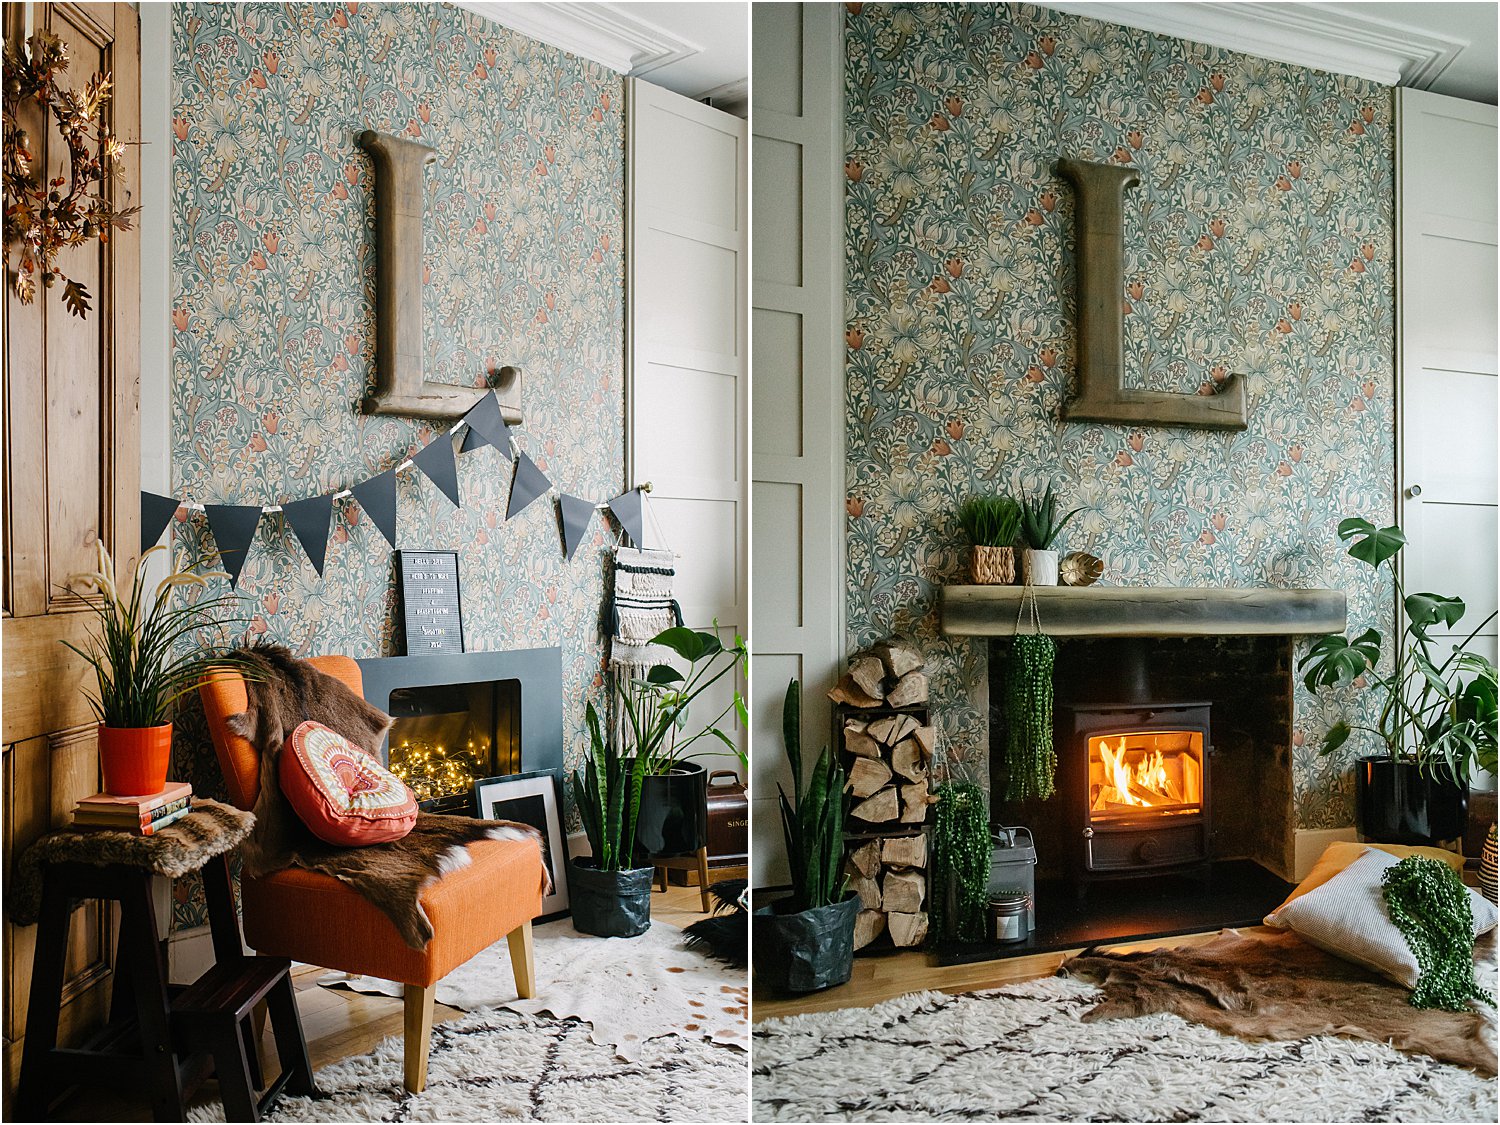 inexpensive-ways-ideas-making-home-cosy-dark-interiors-lily-sawyer-photo